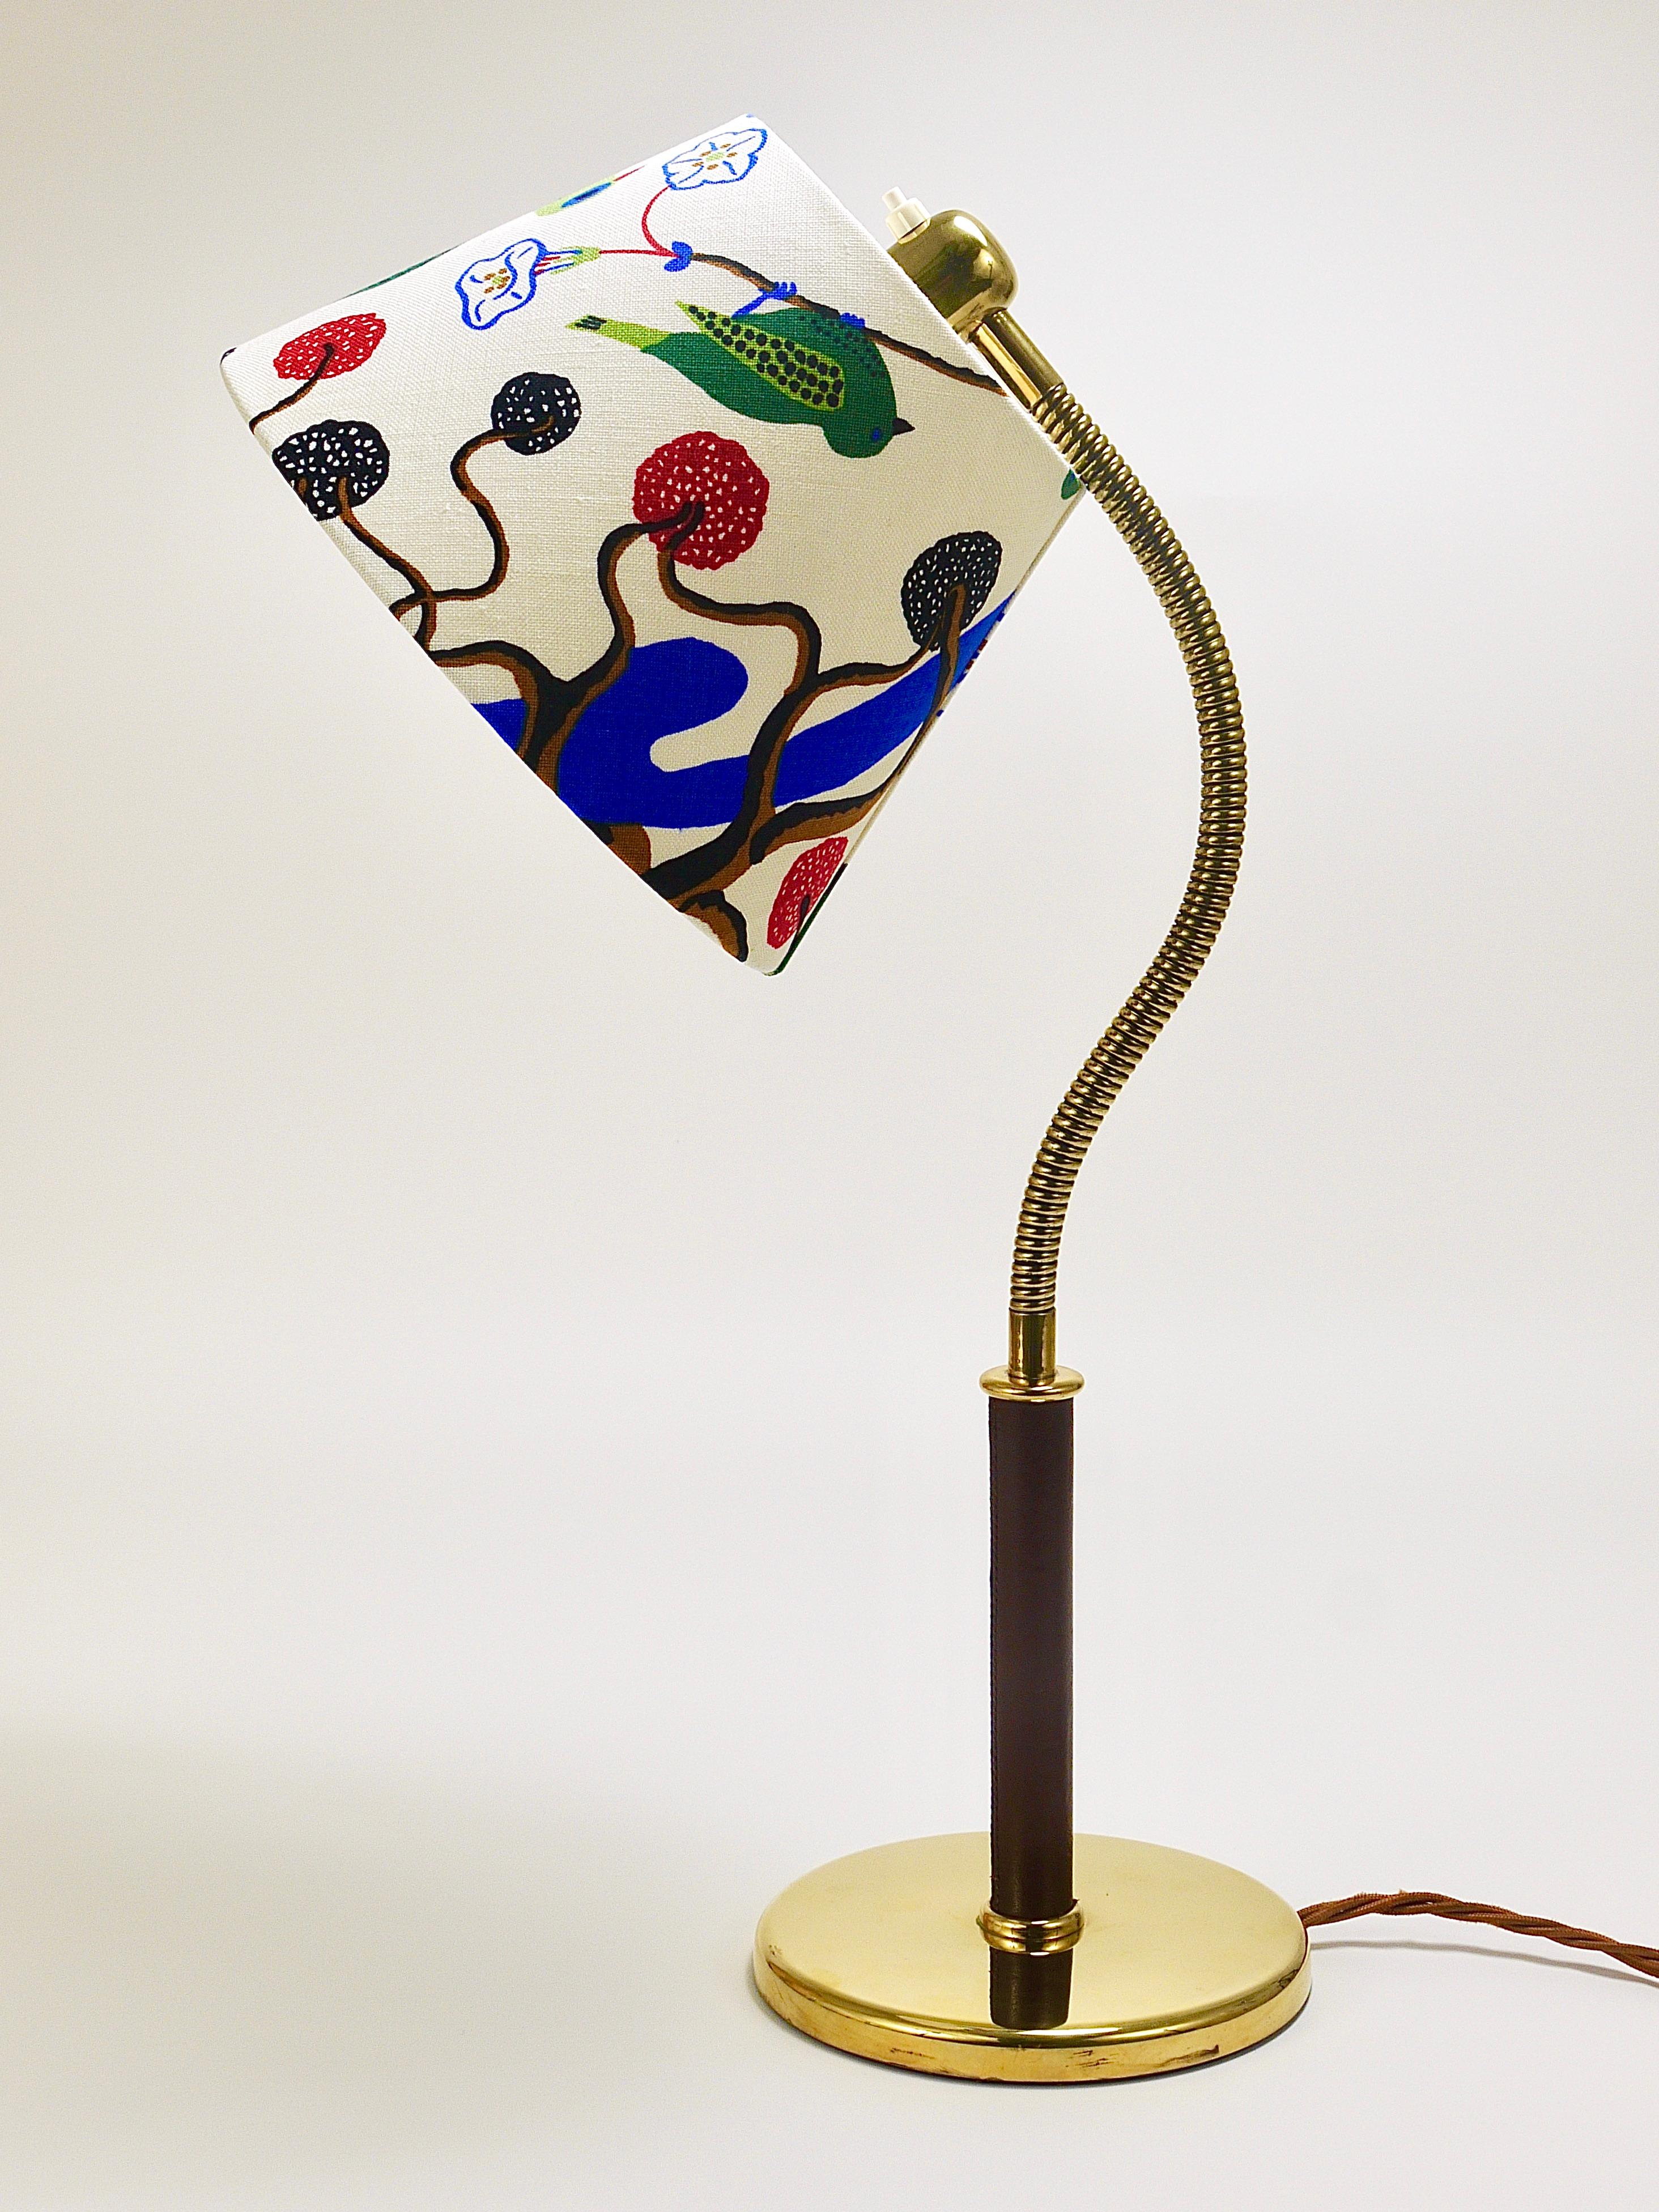 Josef Frank J.T. Kalmar Table Lamp Tisch-Überall, Brass & Leather, Austria, 1930 For Sale 9